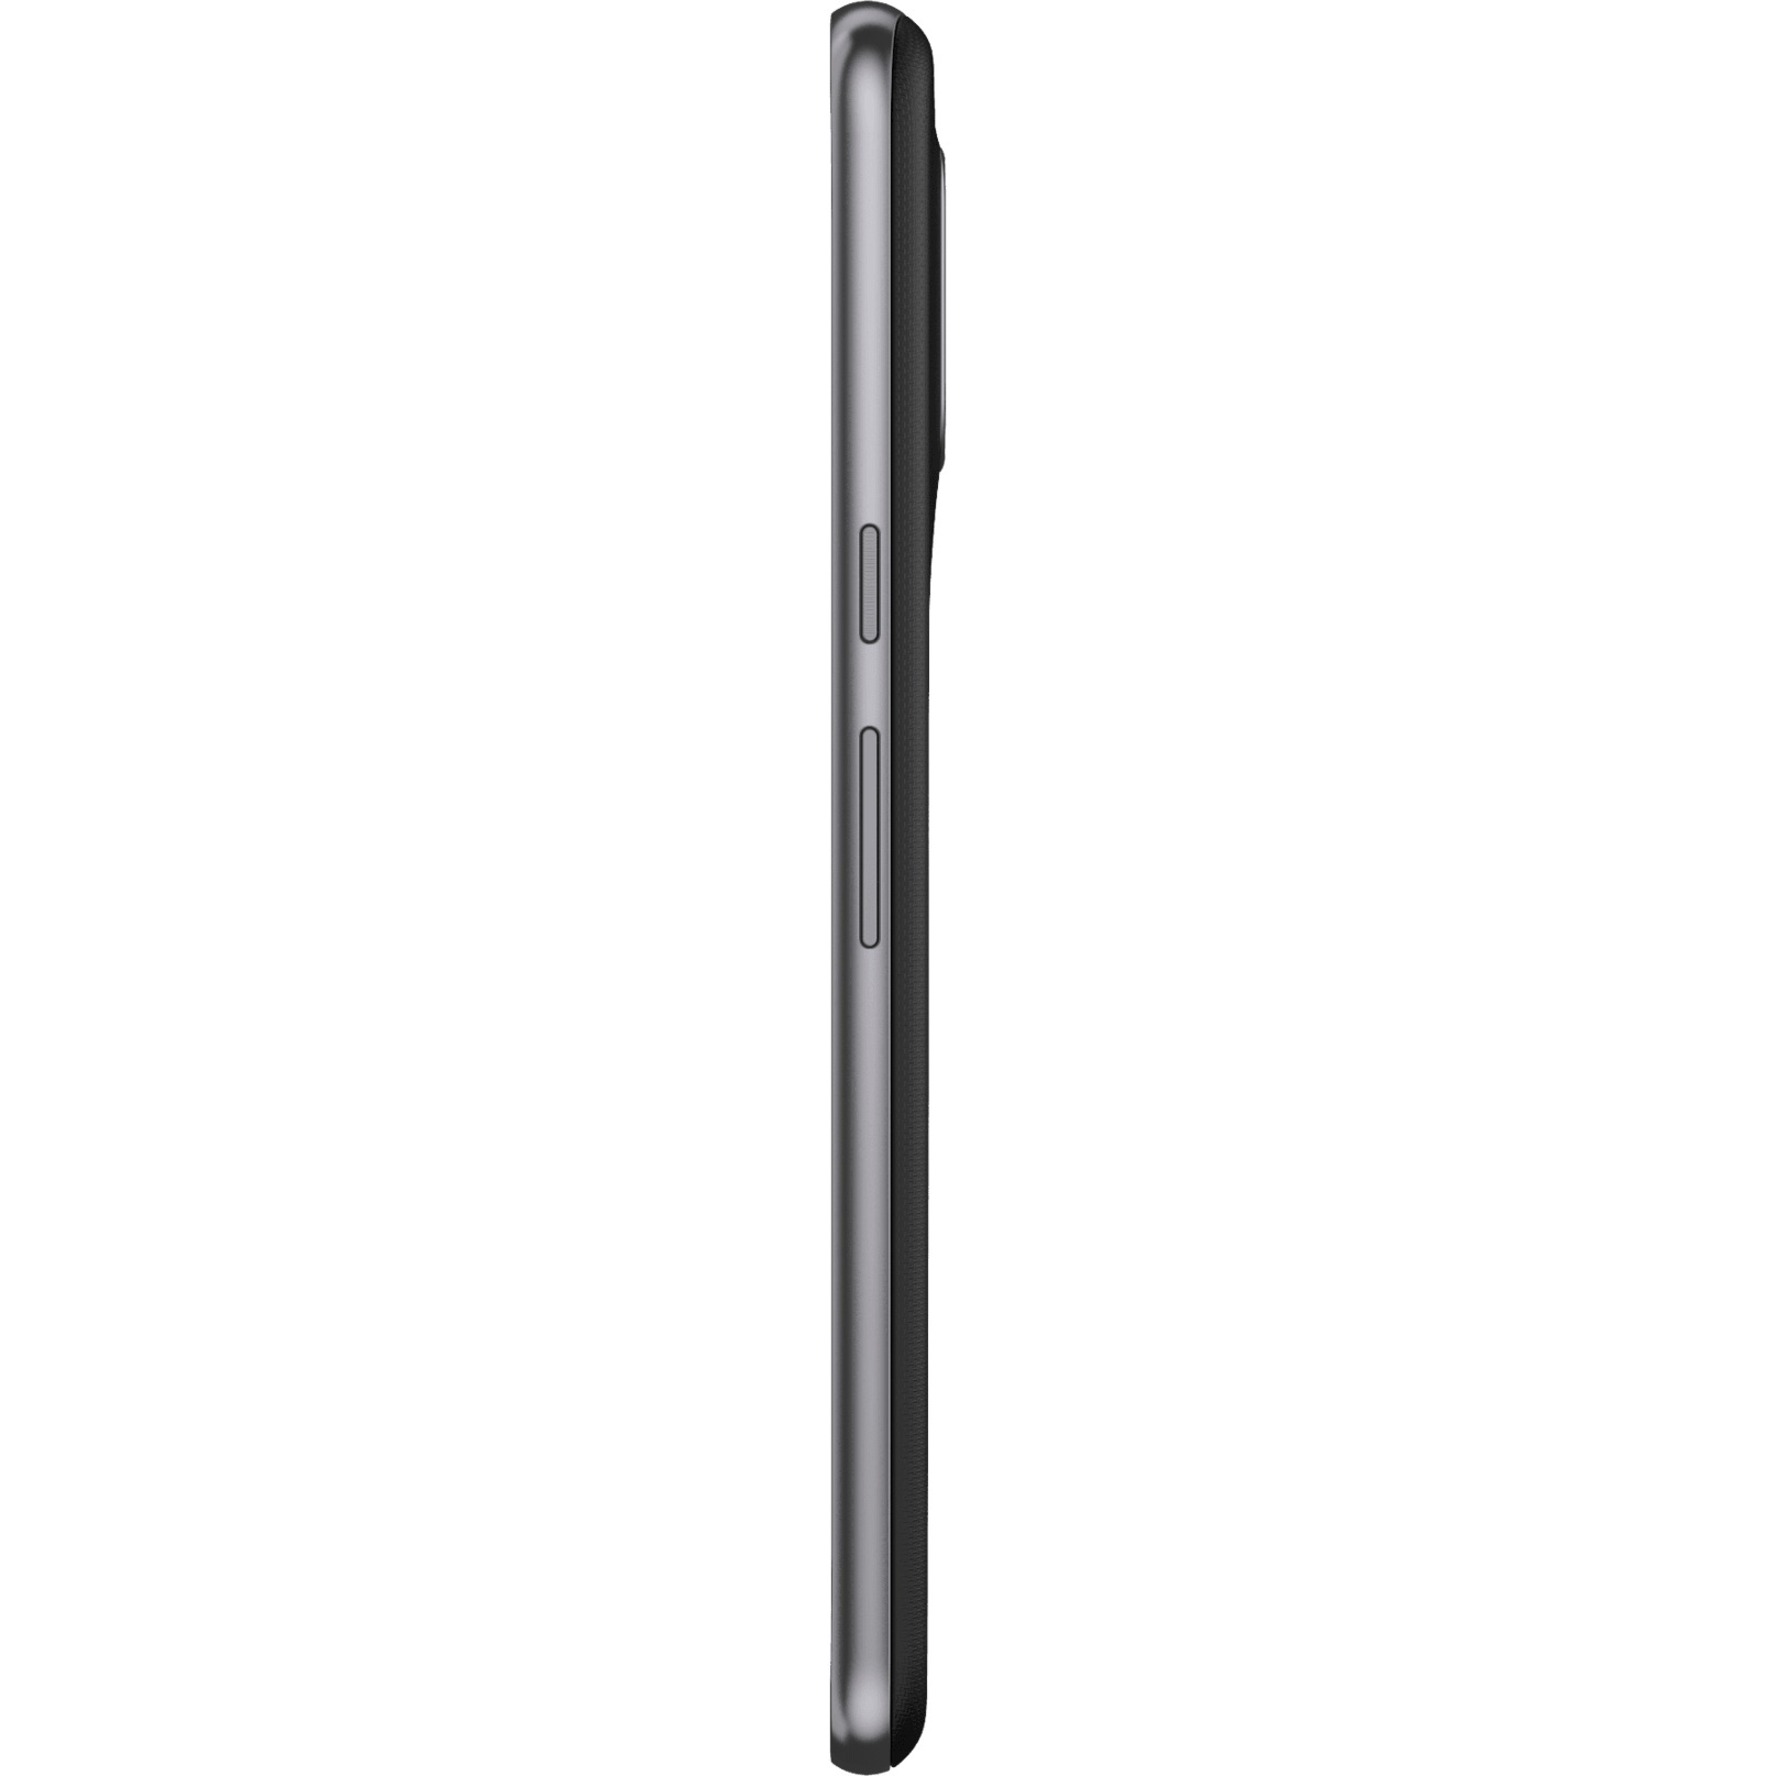 Motorola Moto G4 Plus 16GB Smartphone (Unlocked), Black - image 2 of 15